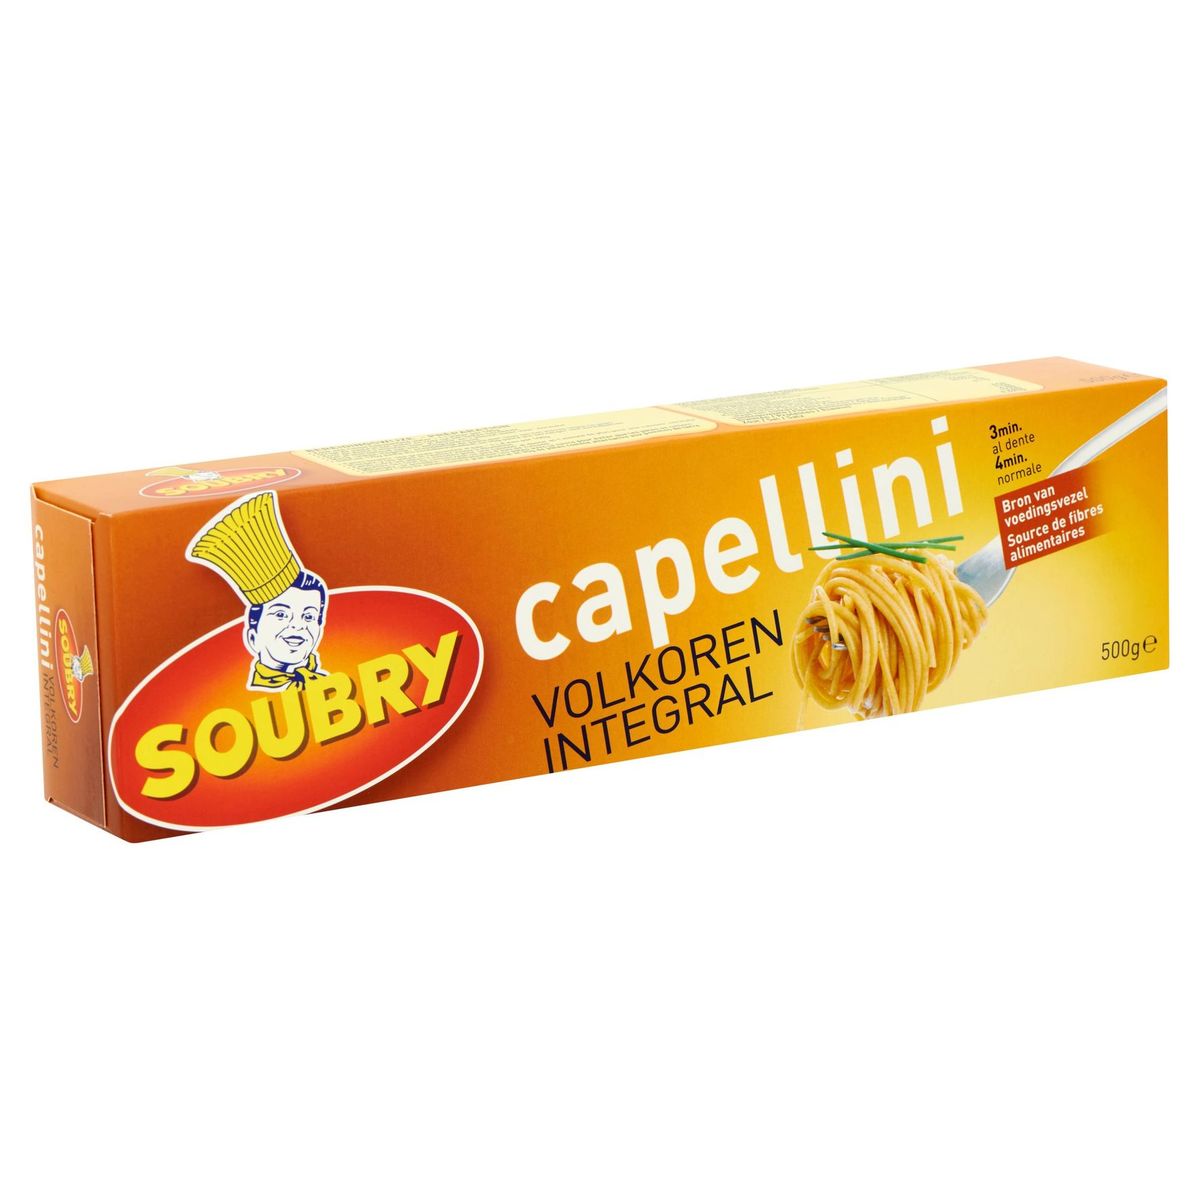 Soubry Pâtes Capellini Intégral 500g